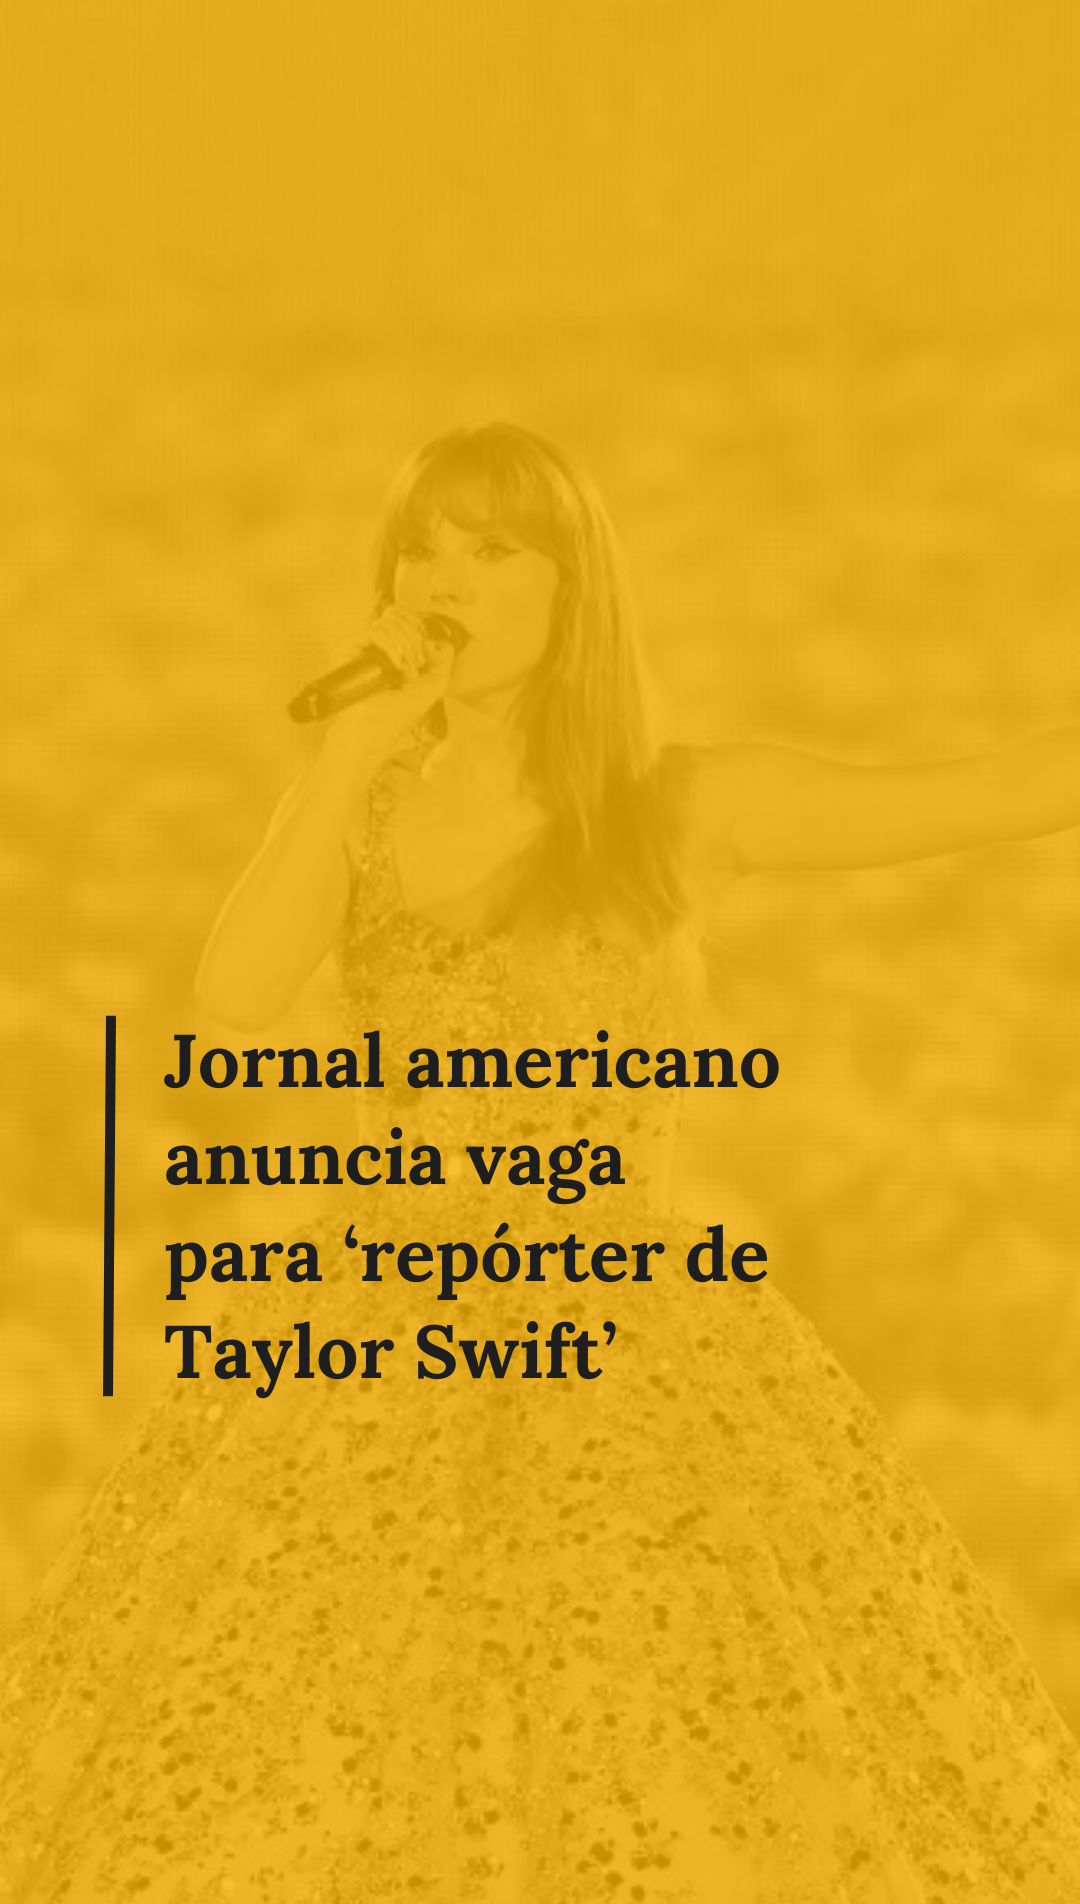 Jornal americano anuncia vaga de emprego para ‘repórter de Taylor Swift’